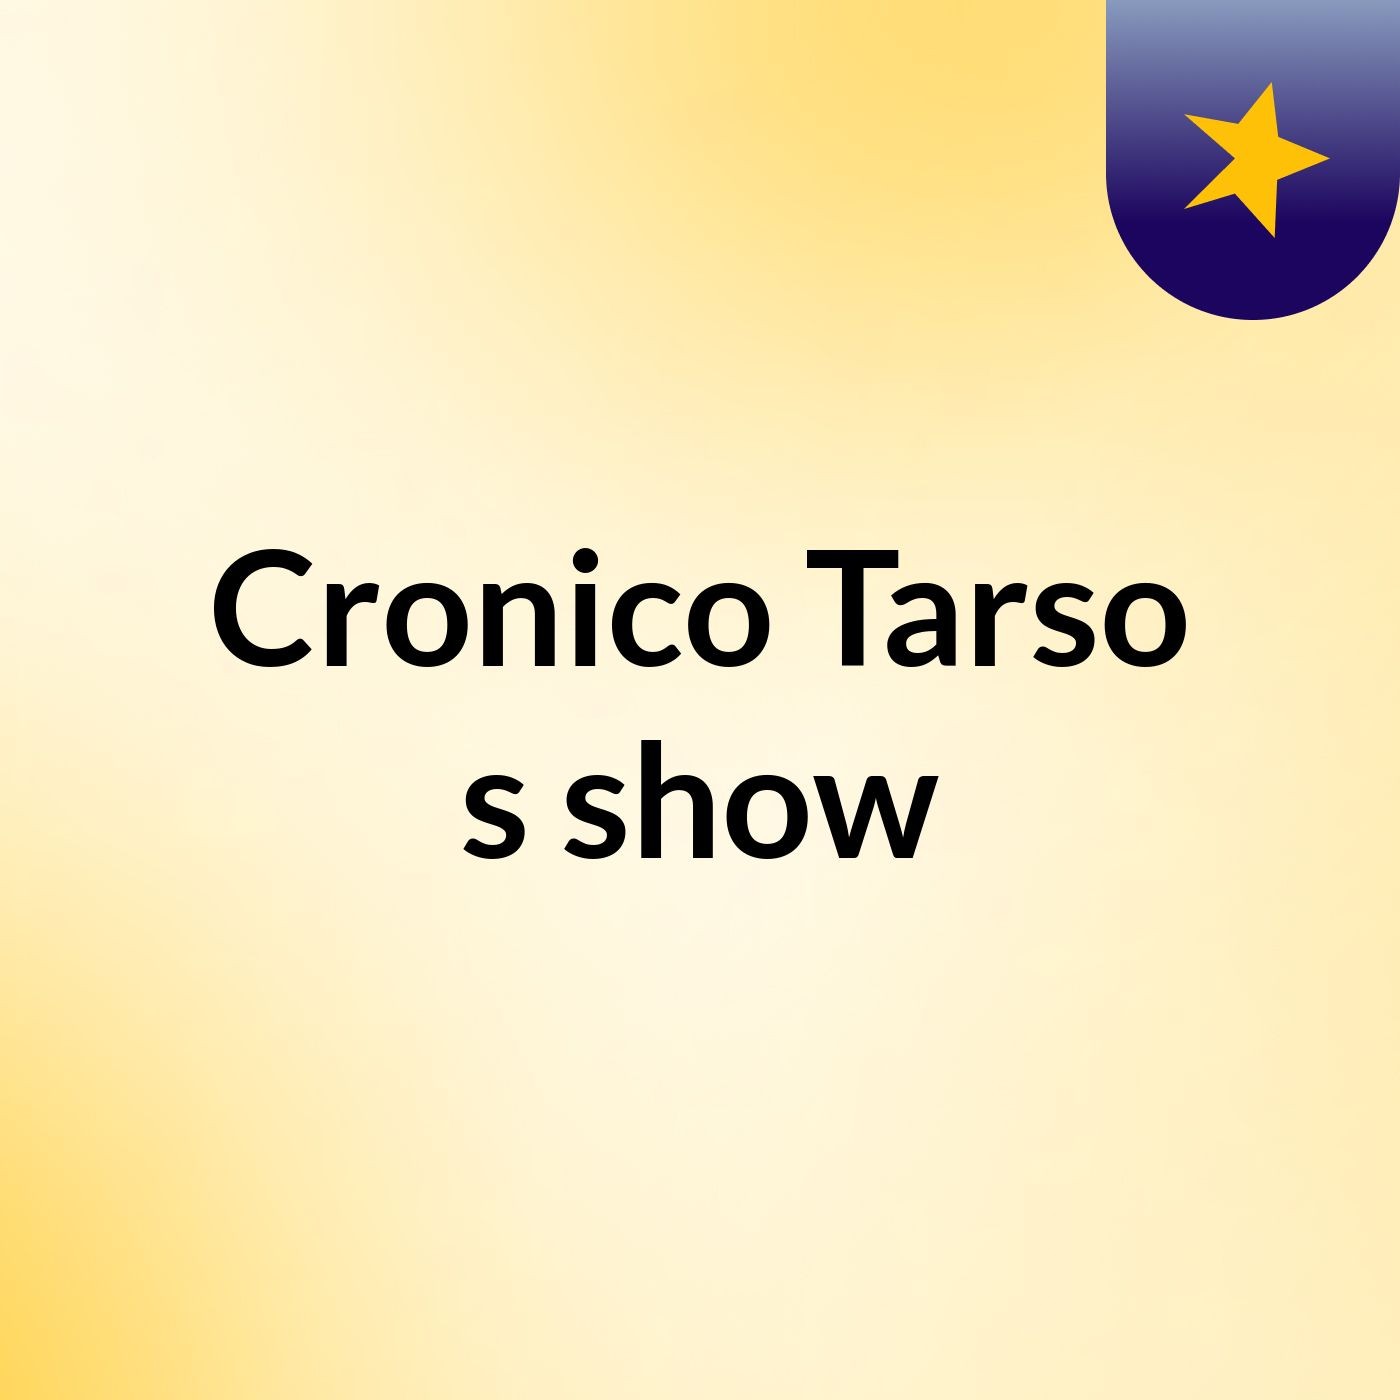 Cronico Tarso's show